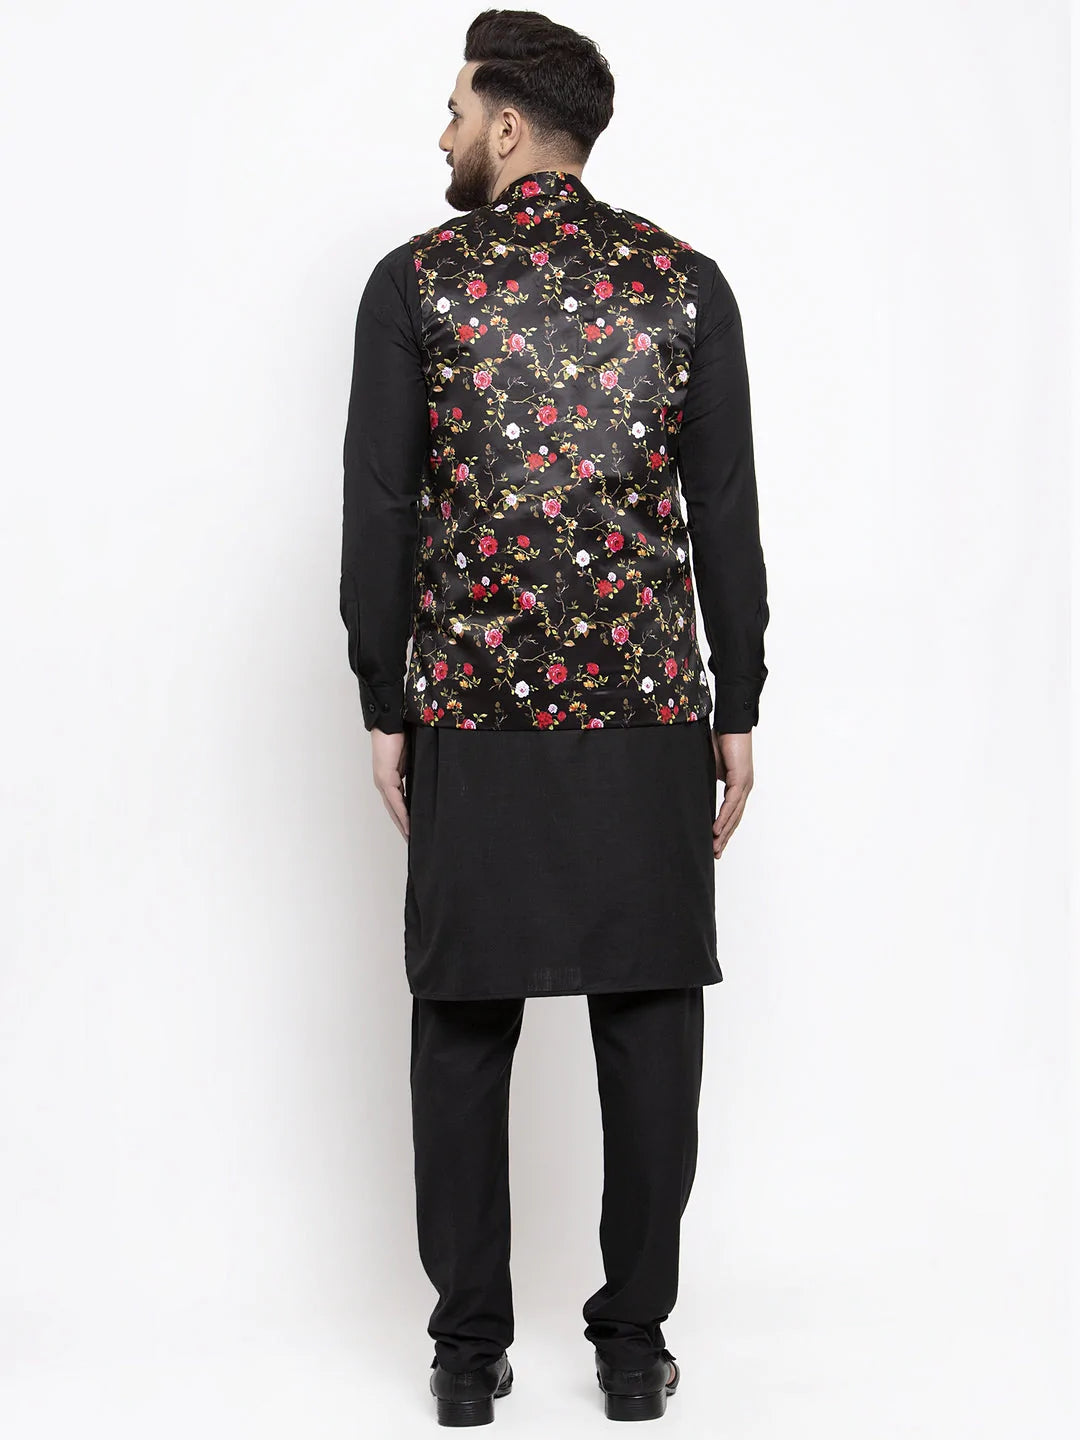 Jompers Men's Solid Cotton Kurta Pajama with Printed Waistcoat ( JOKP WC 4059 Black-B )